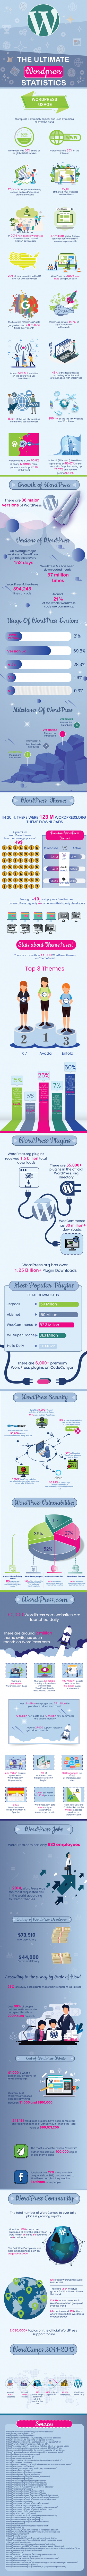 Infographic about WordPress Statistics